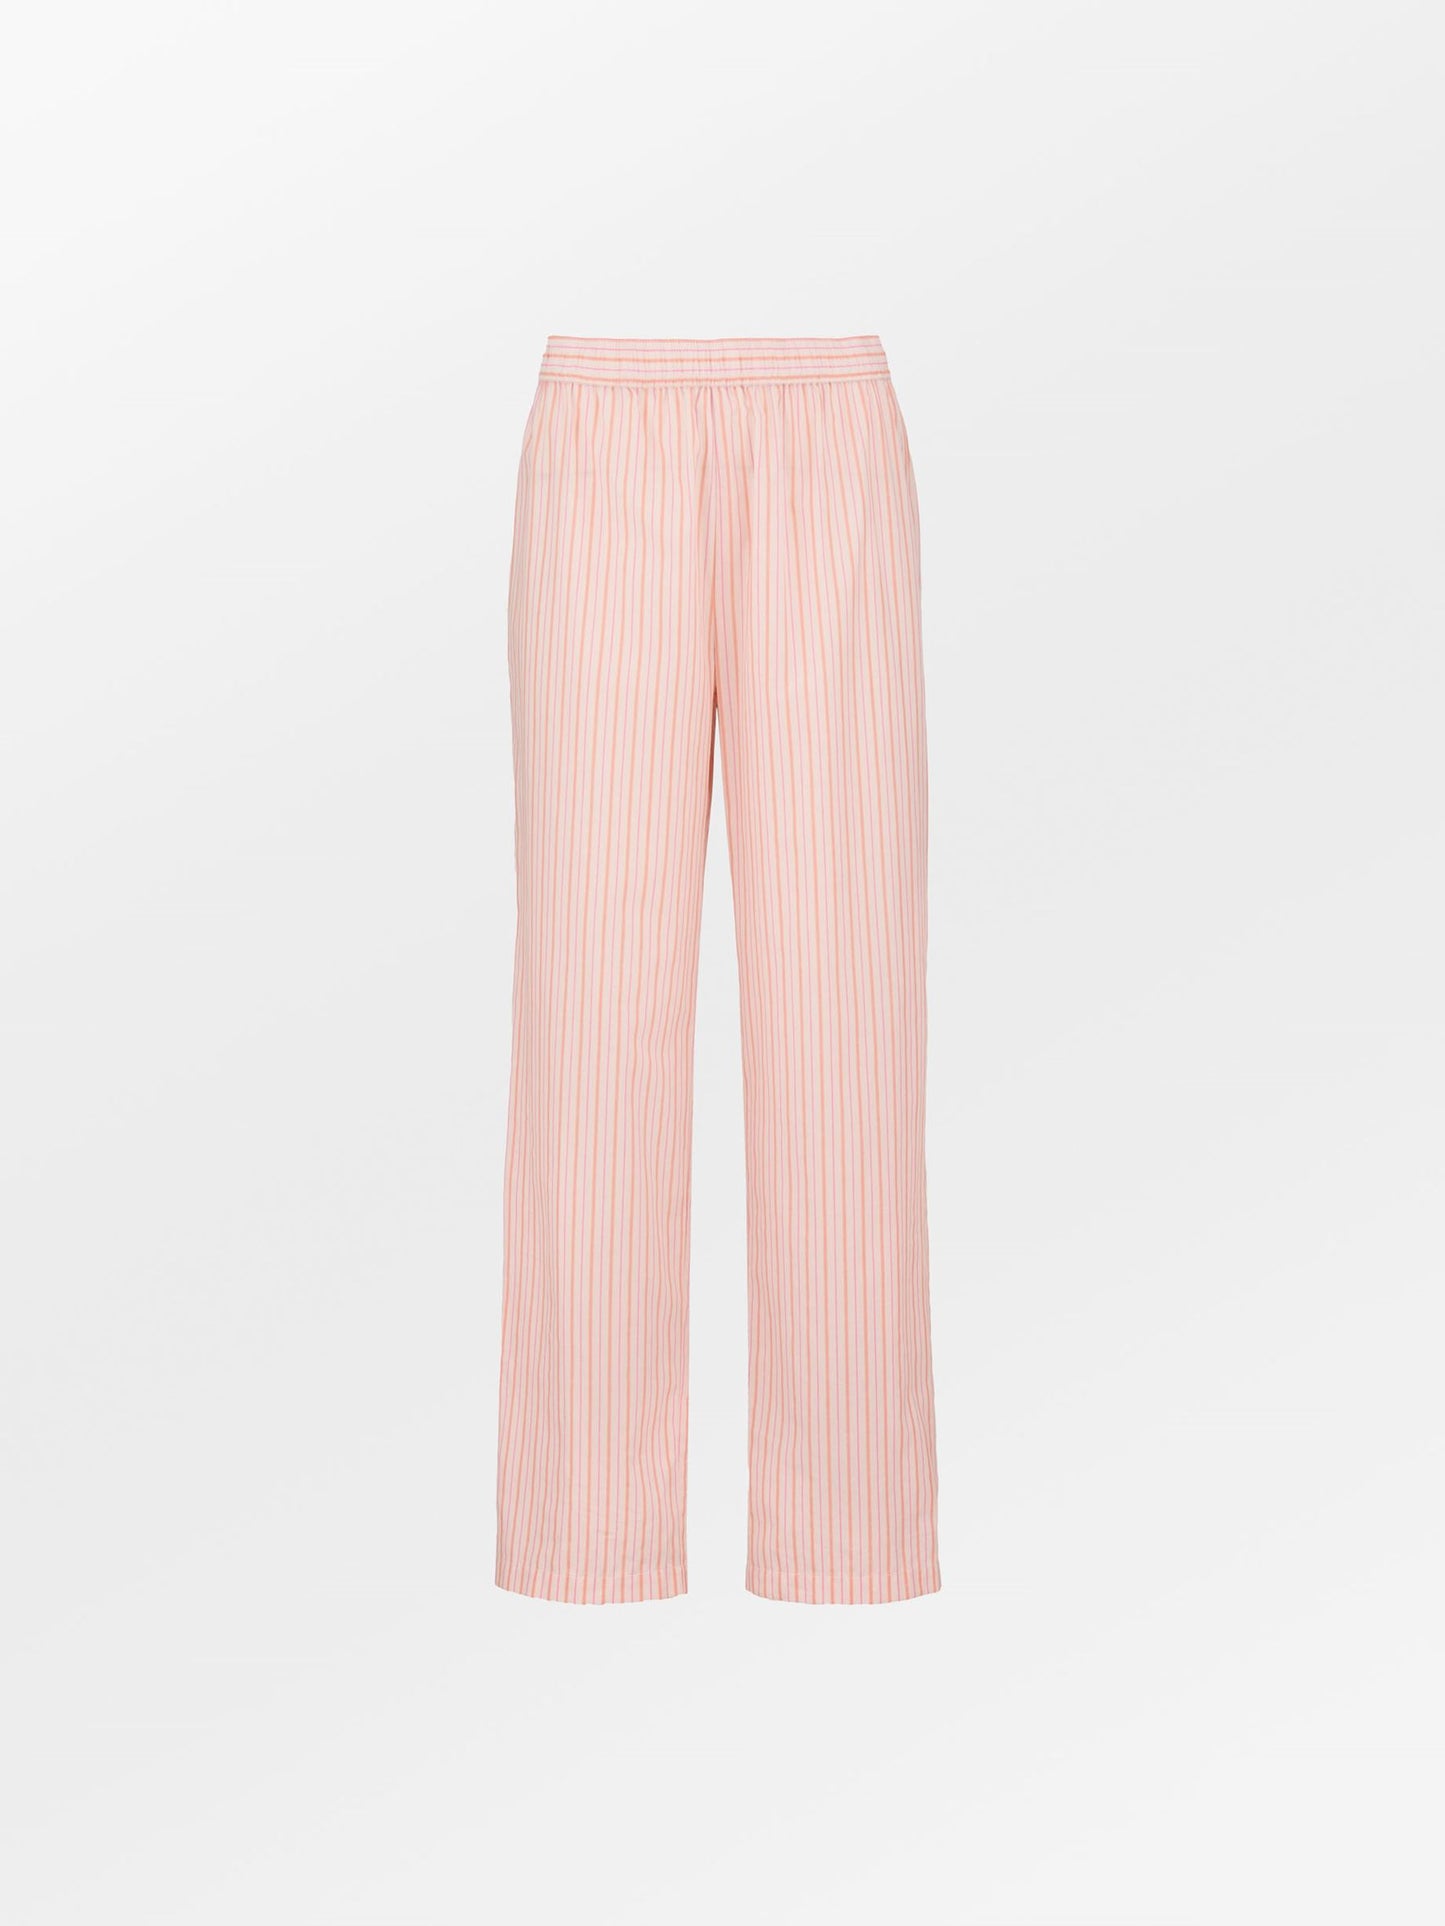 Stripel Pants - Pink Clothing   BeckSöndergaard.no